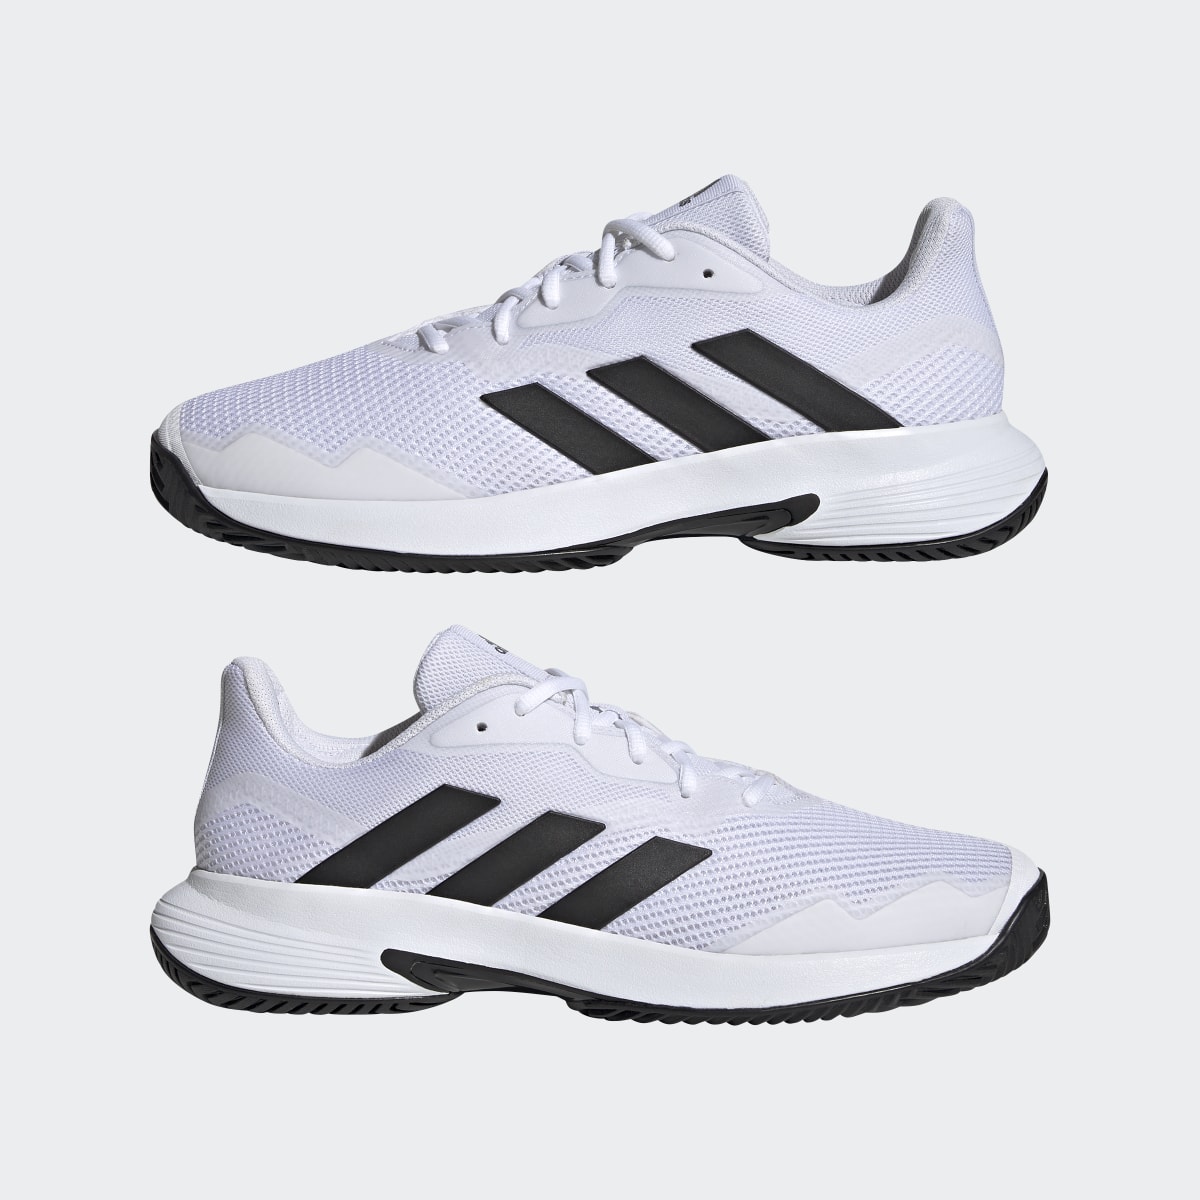 Adidas Courtjam Control Tennis Shoes. 11